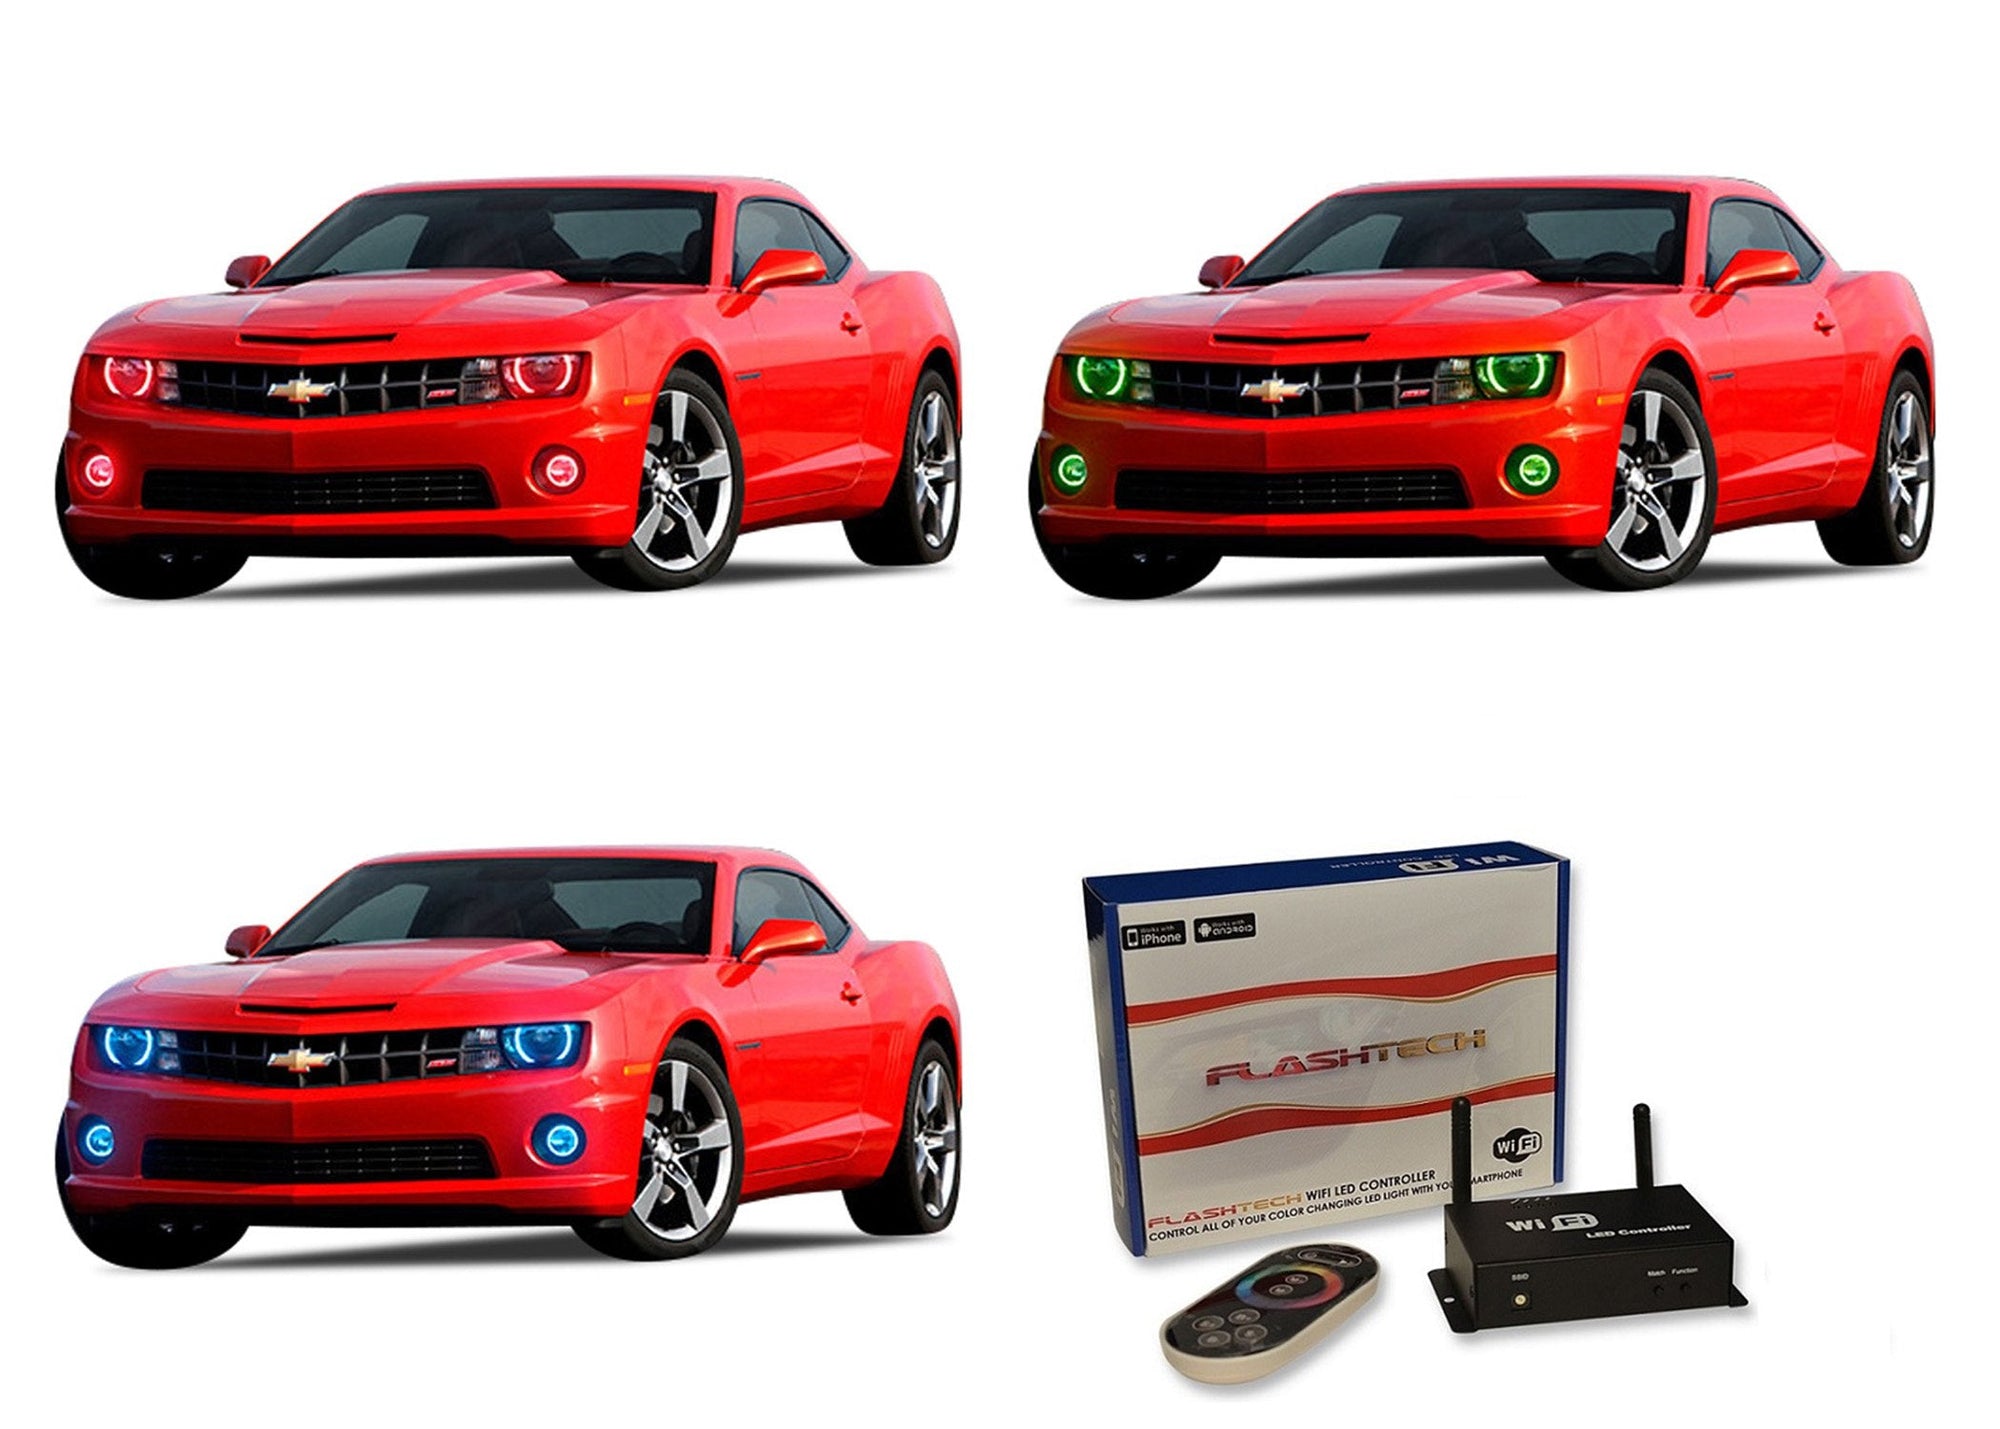 Chevrolet-Camaro-2010, 2011, 2012, 2013-LED-Halo-Headlights and Fog Lights-RGB-WiFi Remote-CY-CANR1013-V3HFWI